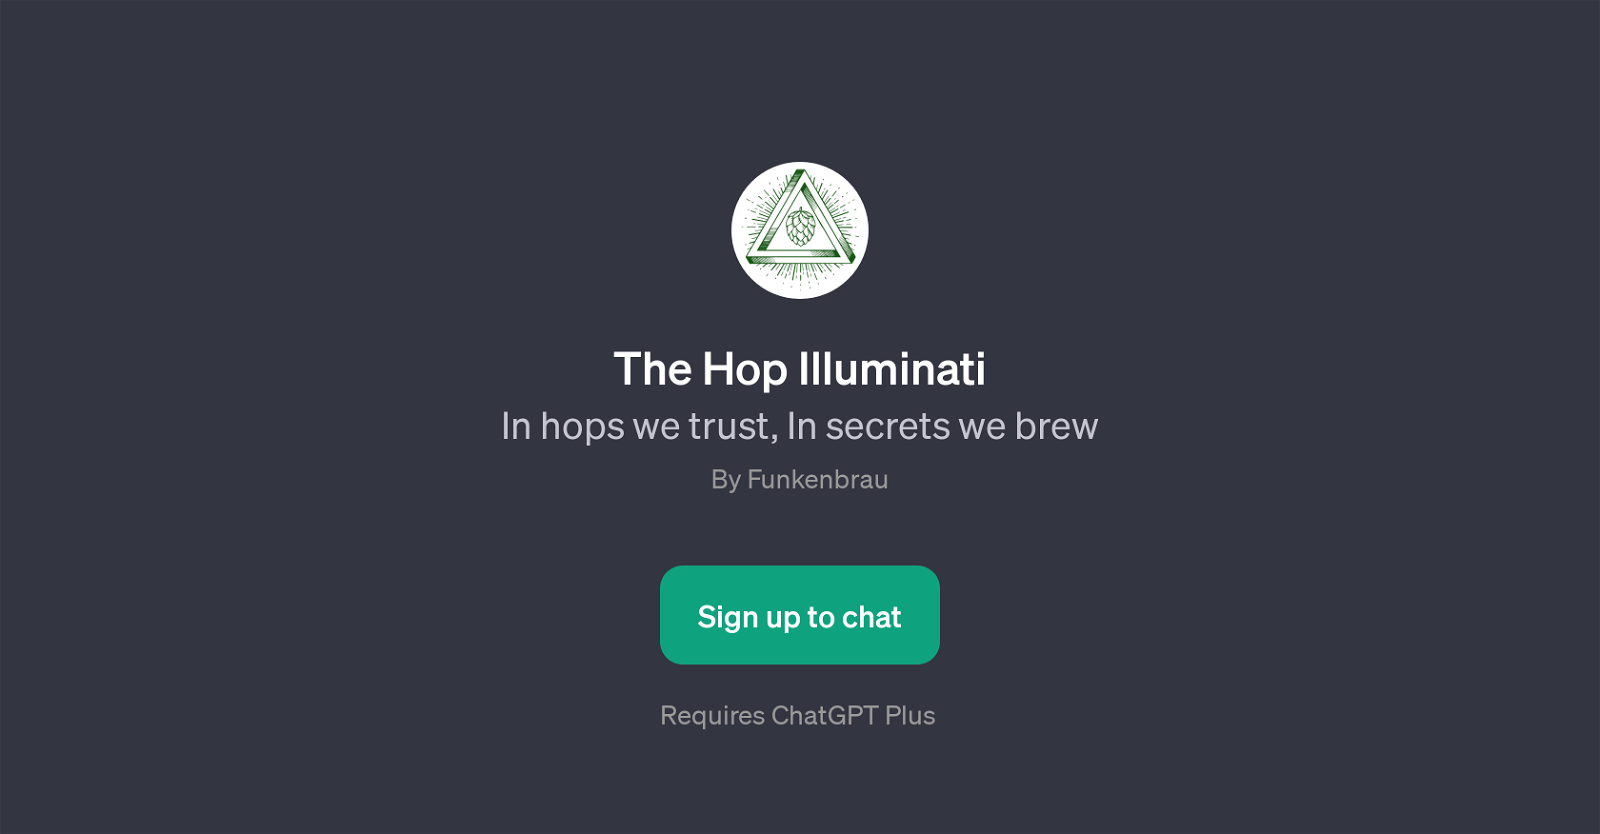 The Hop Illuminati website